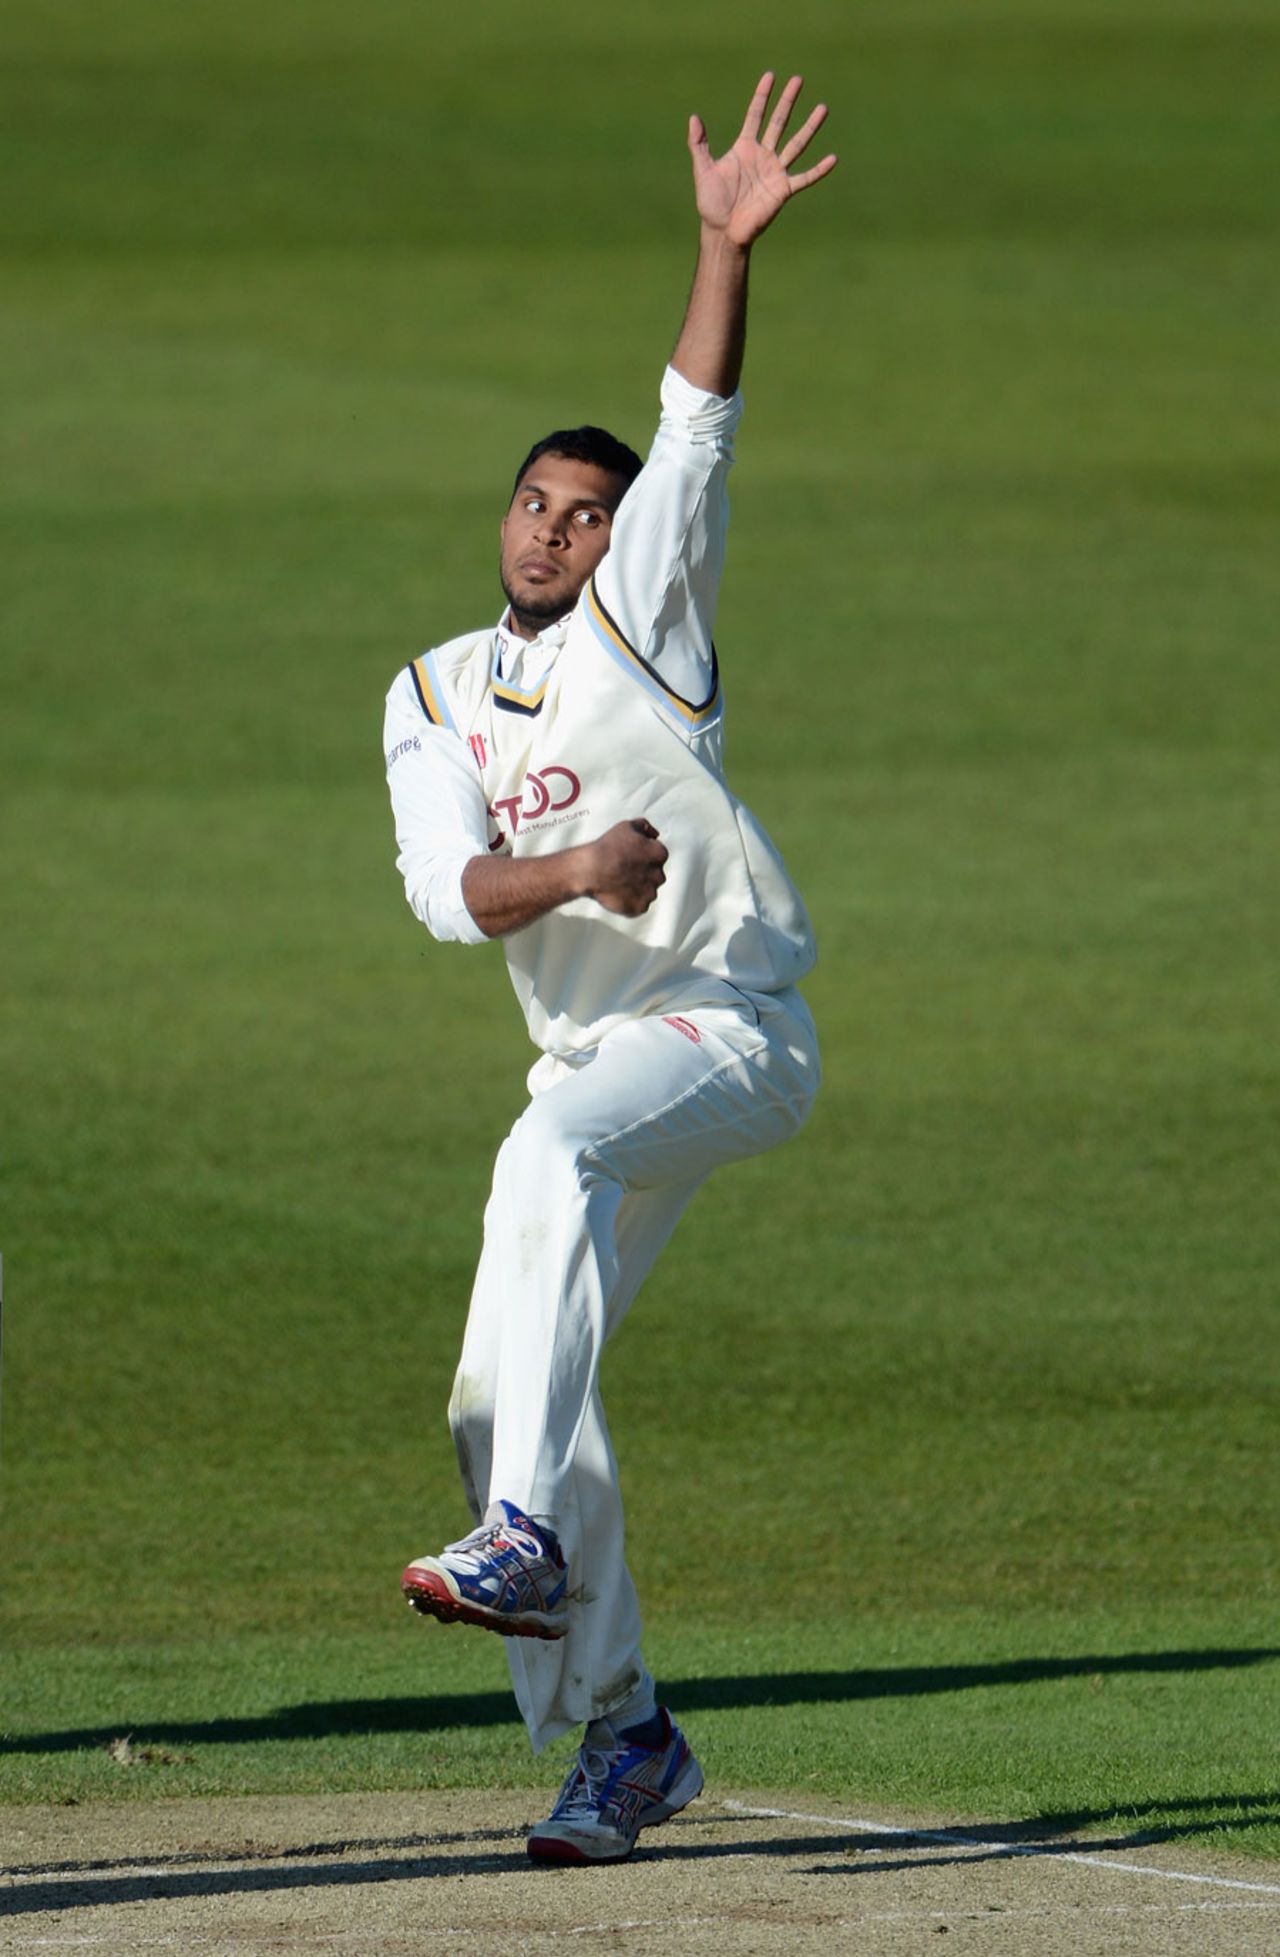 Adil Rashid bowls in Kent's first innings, Yoskhire v Kent, Headingley, April, 5, 2012